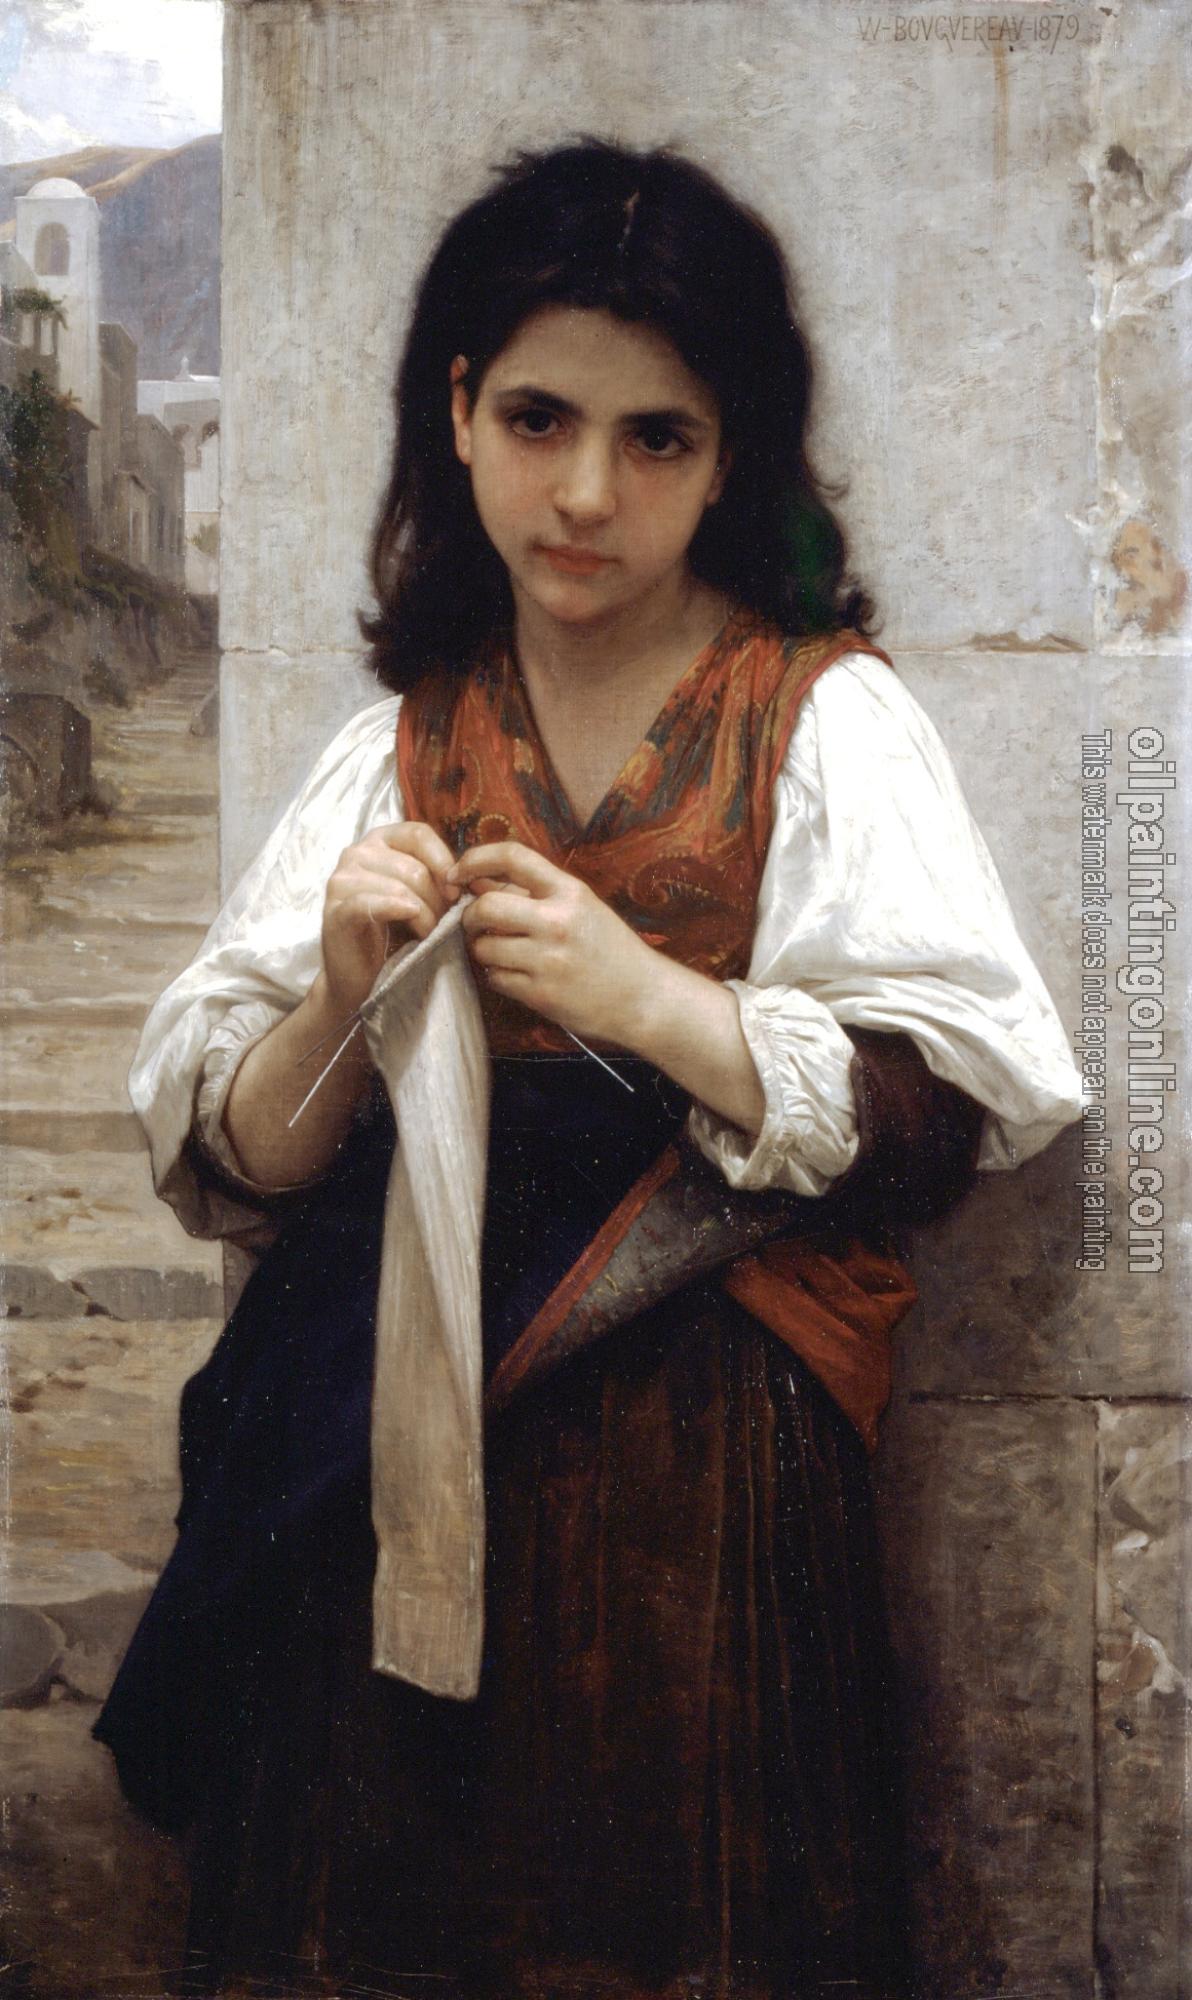 Bouguereau, William-Adolphe - The Little Knitter